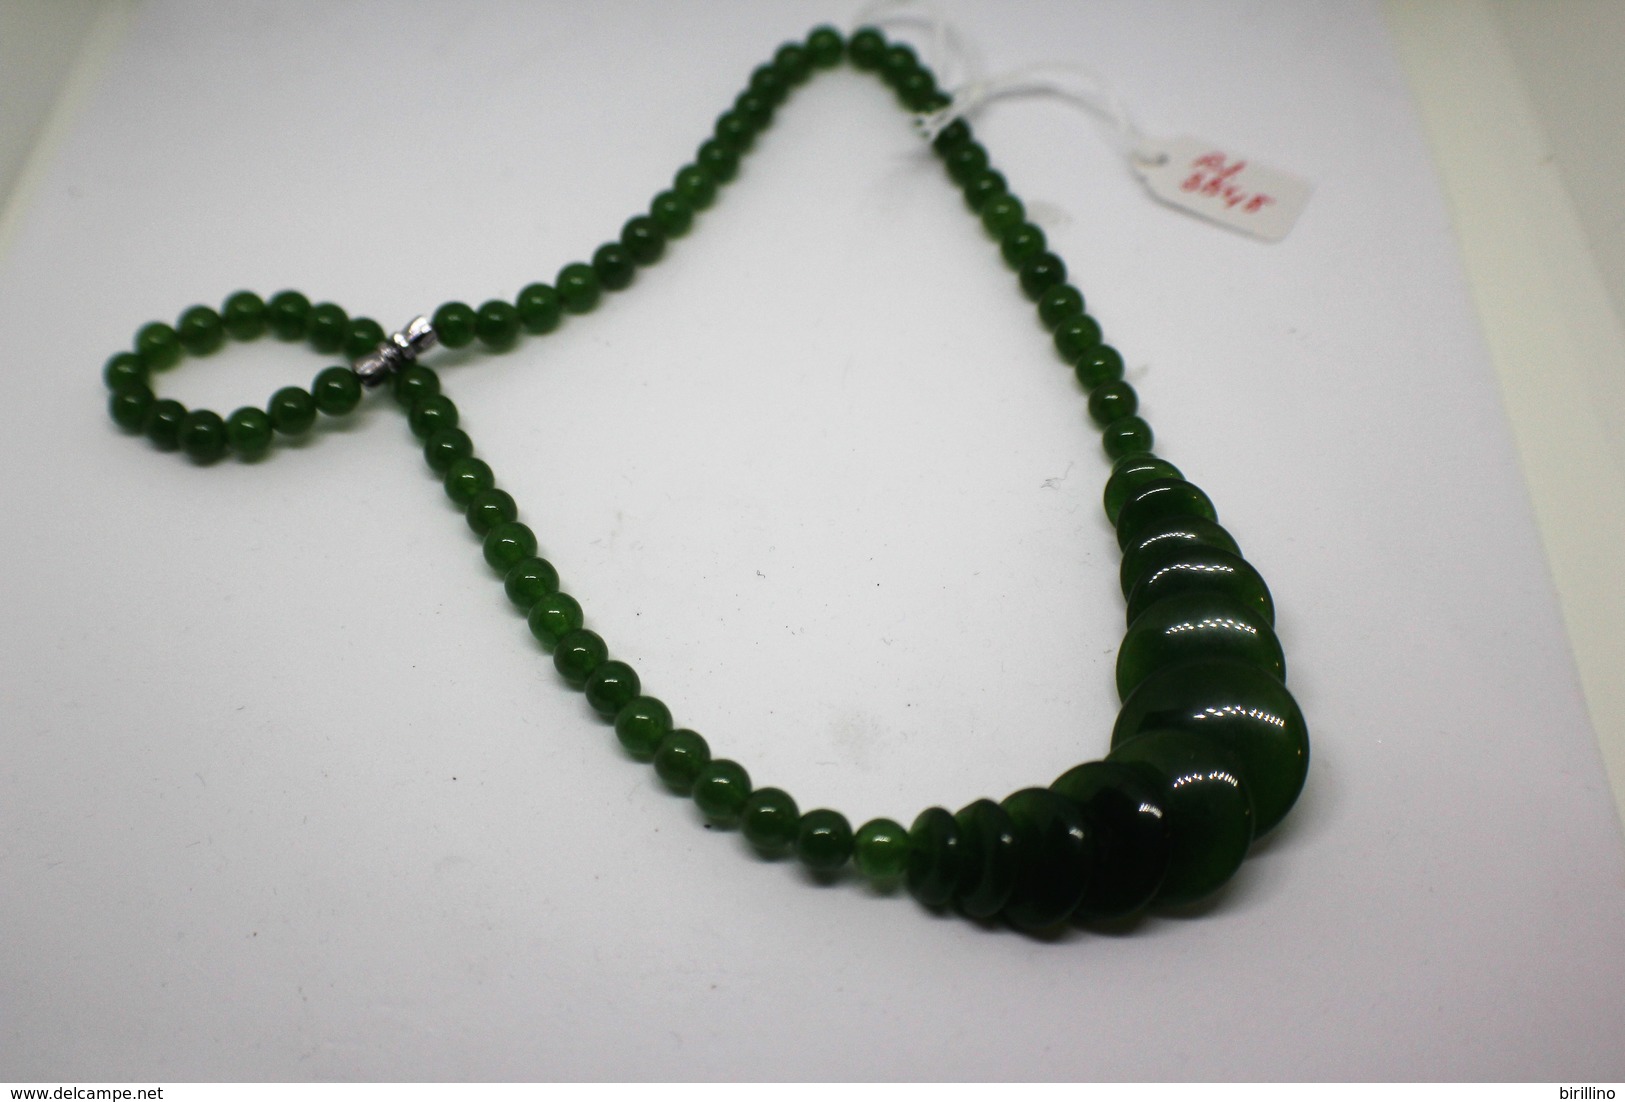 3848 - Collana Di Giada Naturale (serpentino New Jade) Lucidata A Mano. Peso Totale 38 Gr. - Arte Orientale